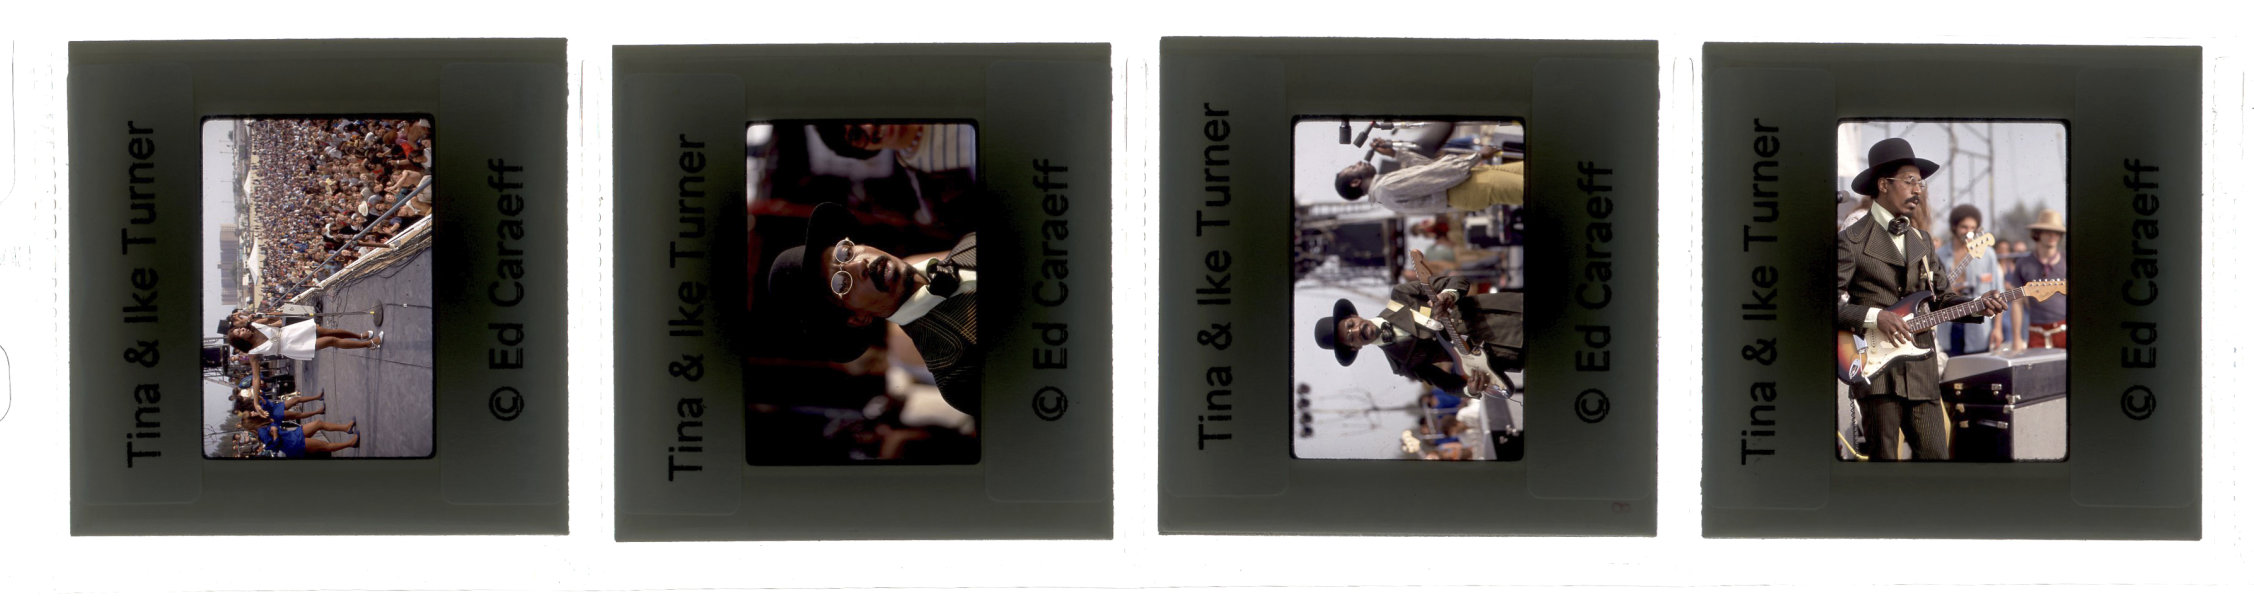 EC_IkeTurner_002: Ike & Tina Turner